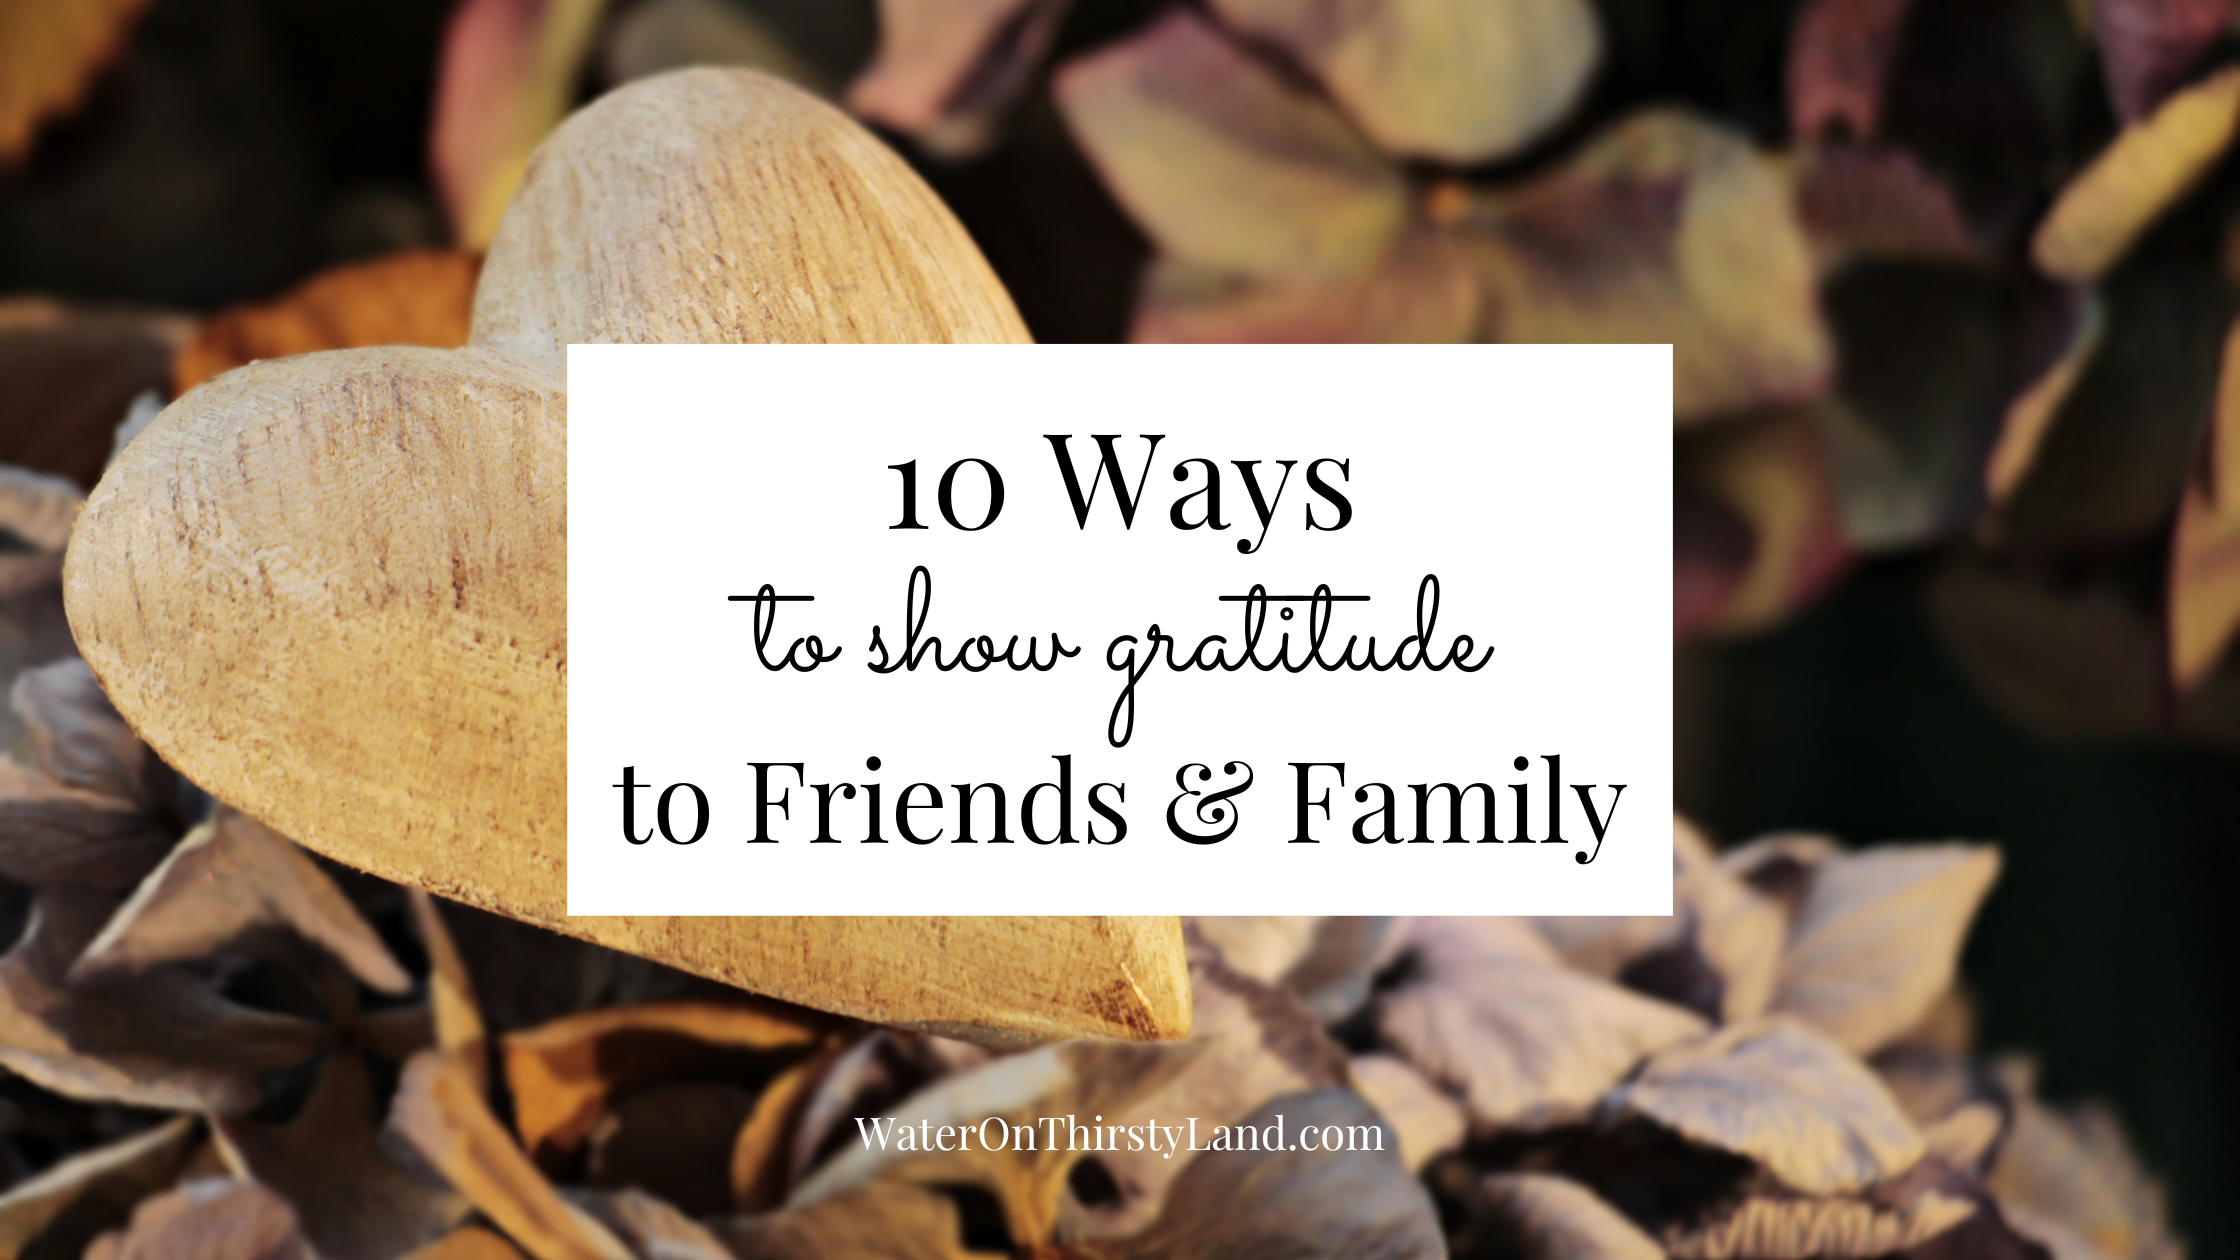 10 Ways to show gratitude to Friends & Family